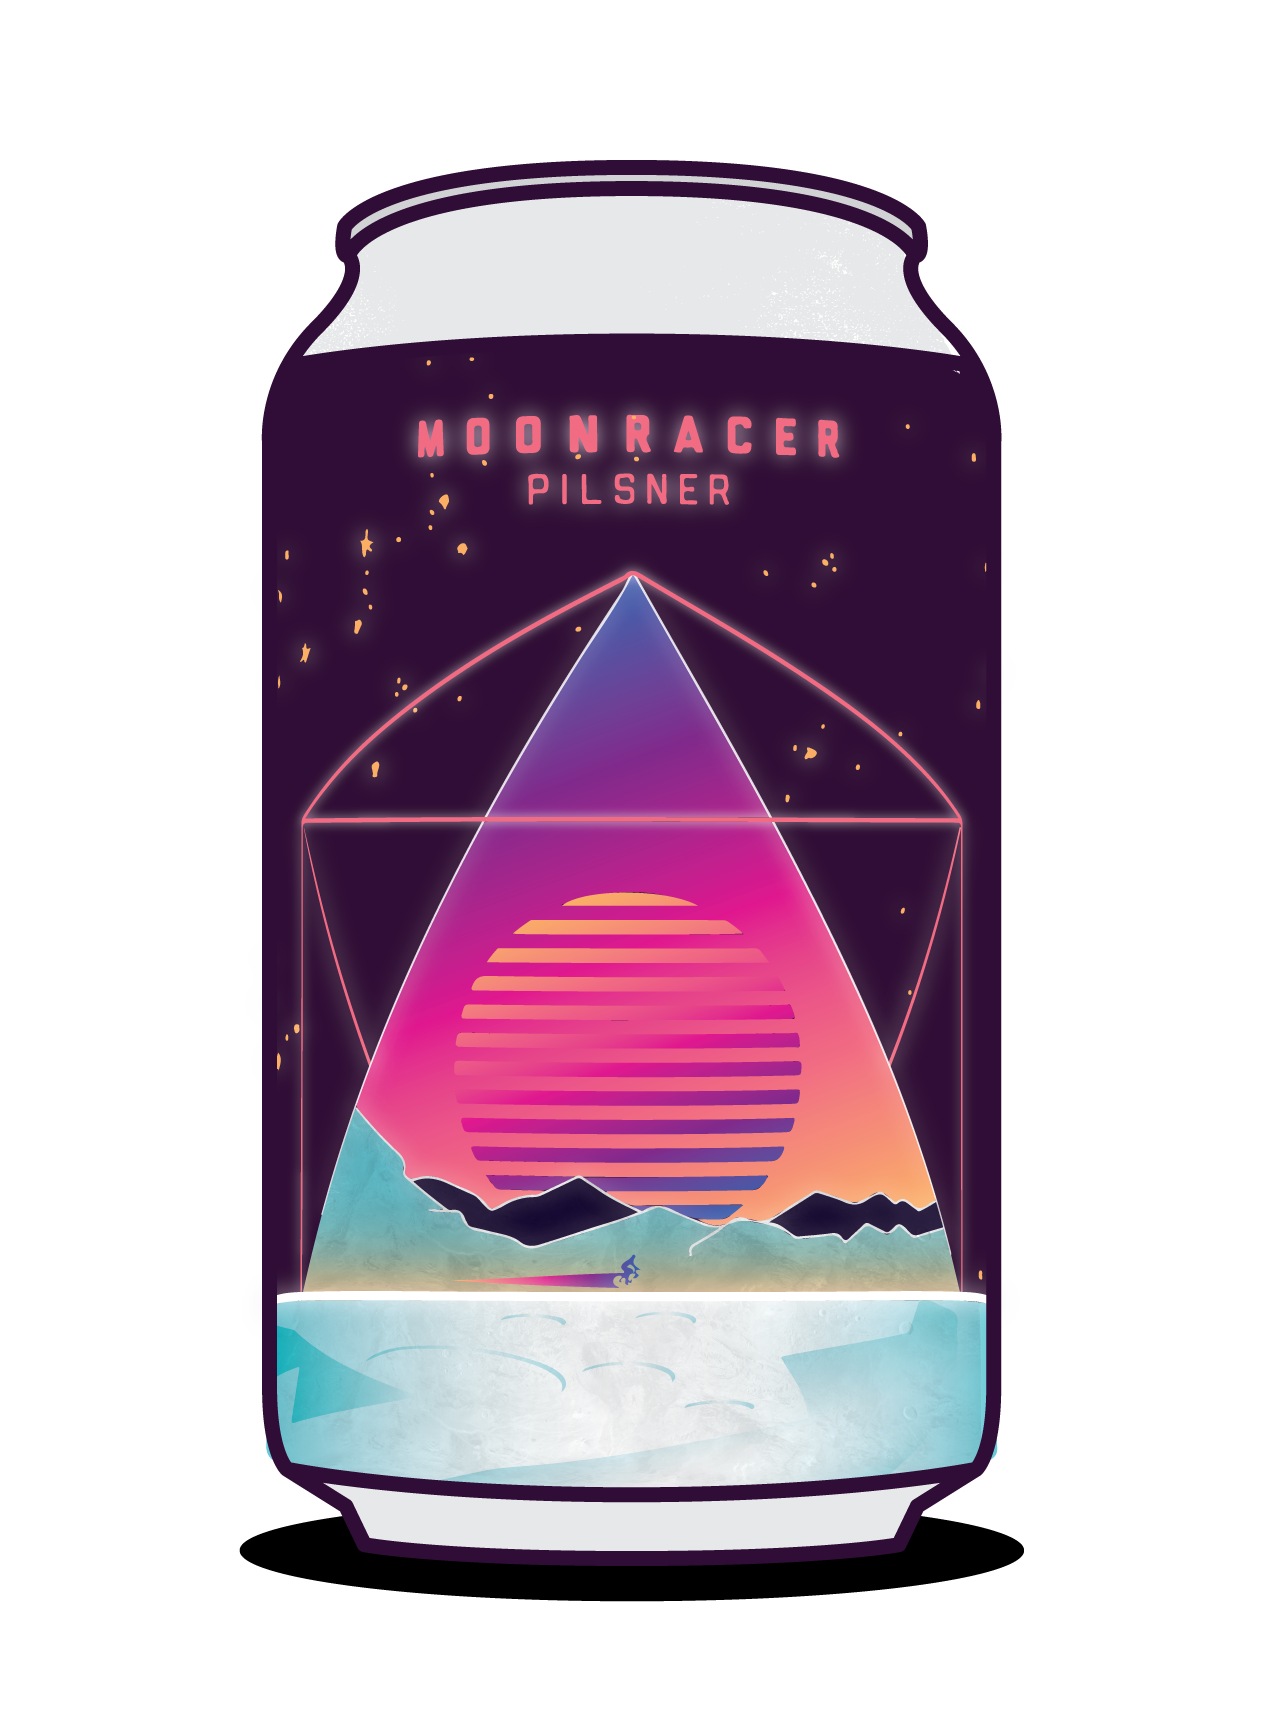 Moonracer-image